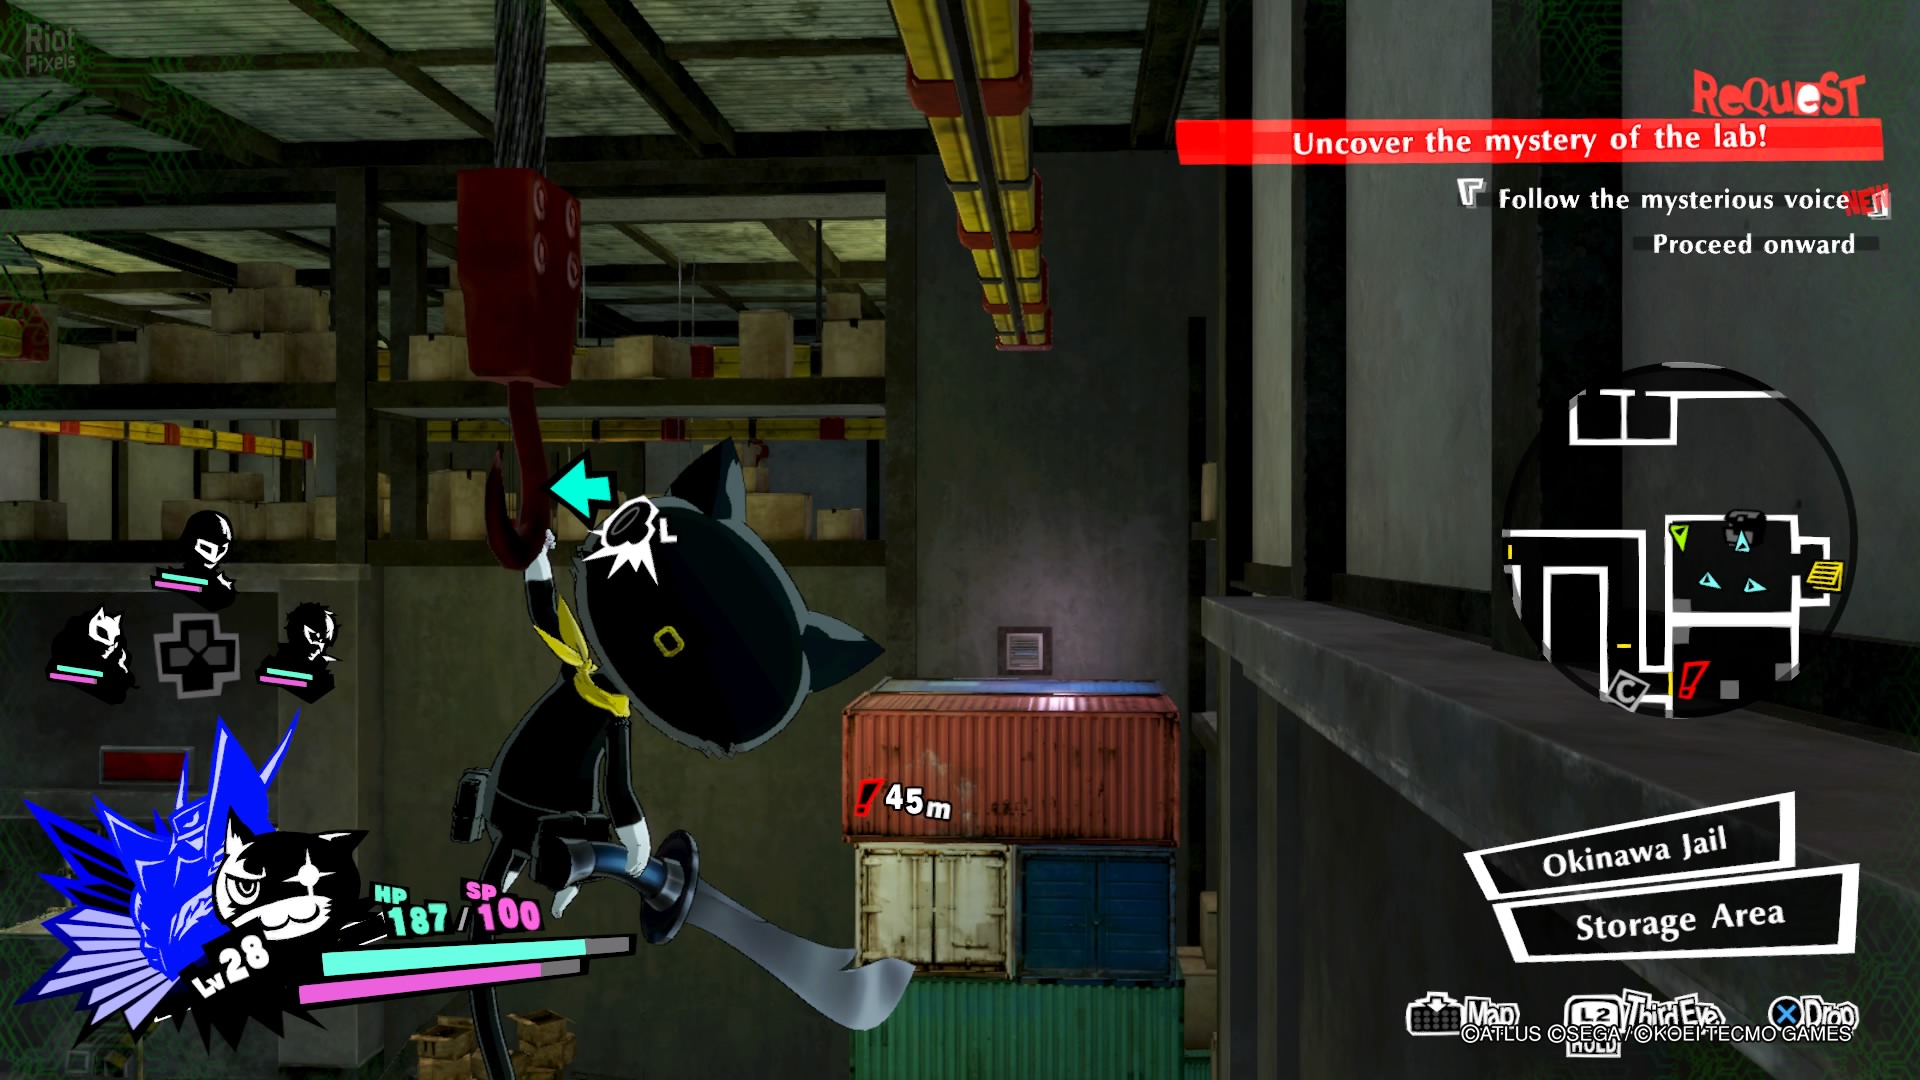 Persona 5 Strikers - game screenshots at Riot Pixels, images